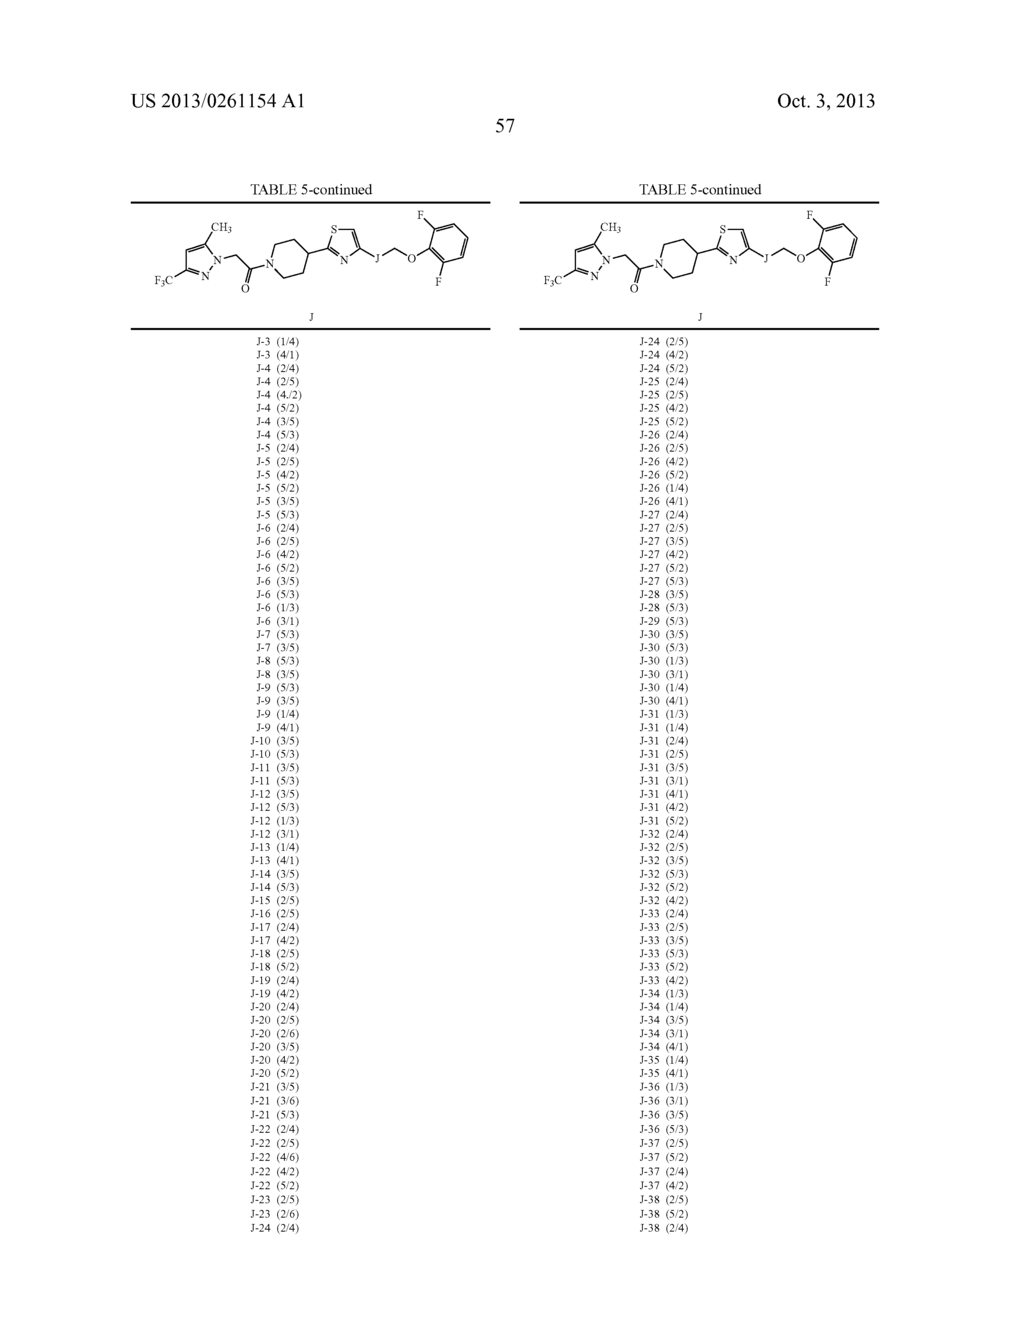 FUNGICIDAL AZOCYCLIC AMIDES - diagram, schematic, and image 58